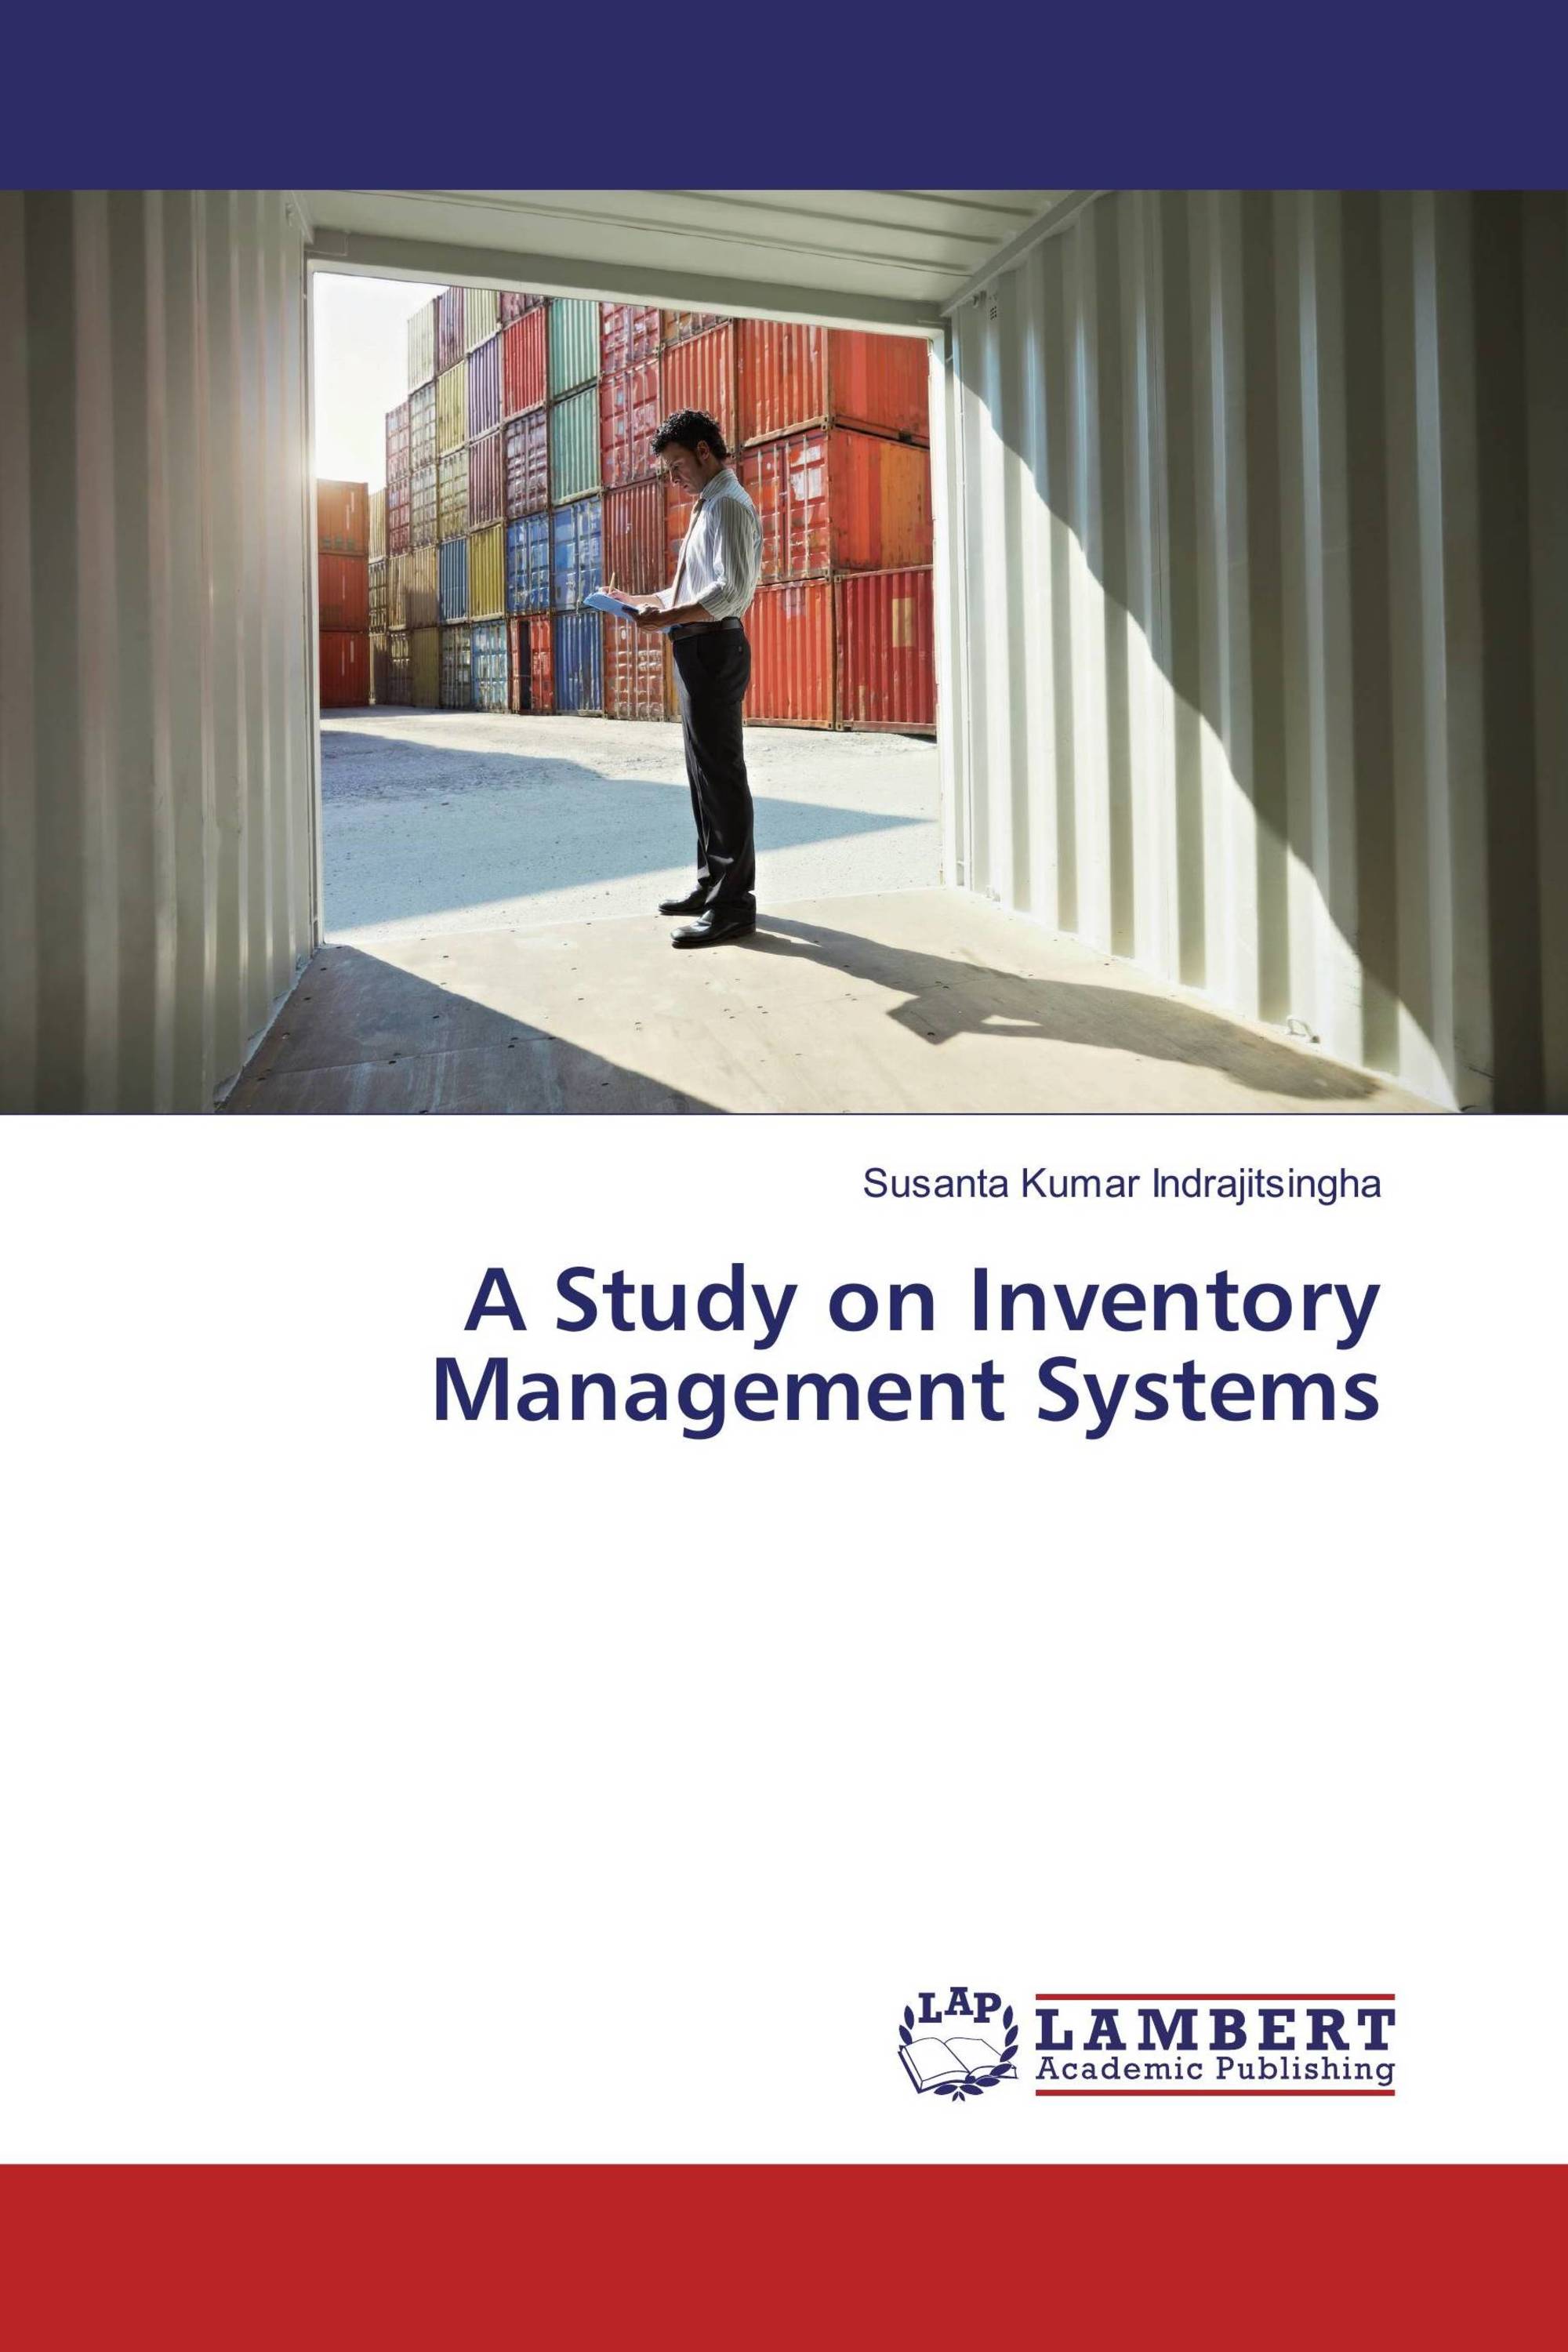 short case study on inventory management